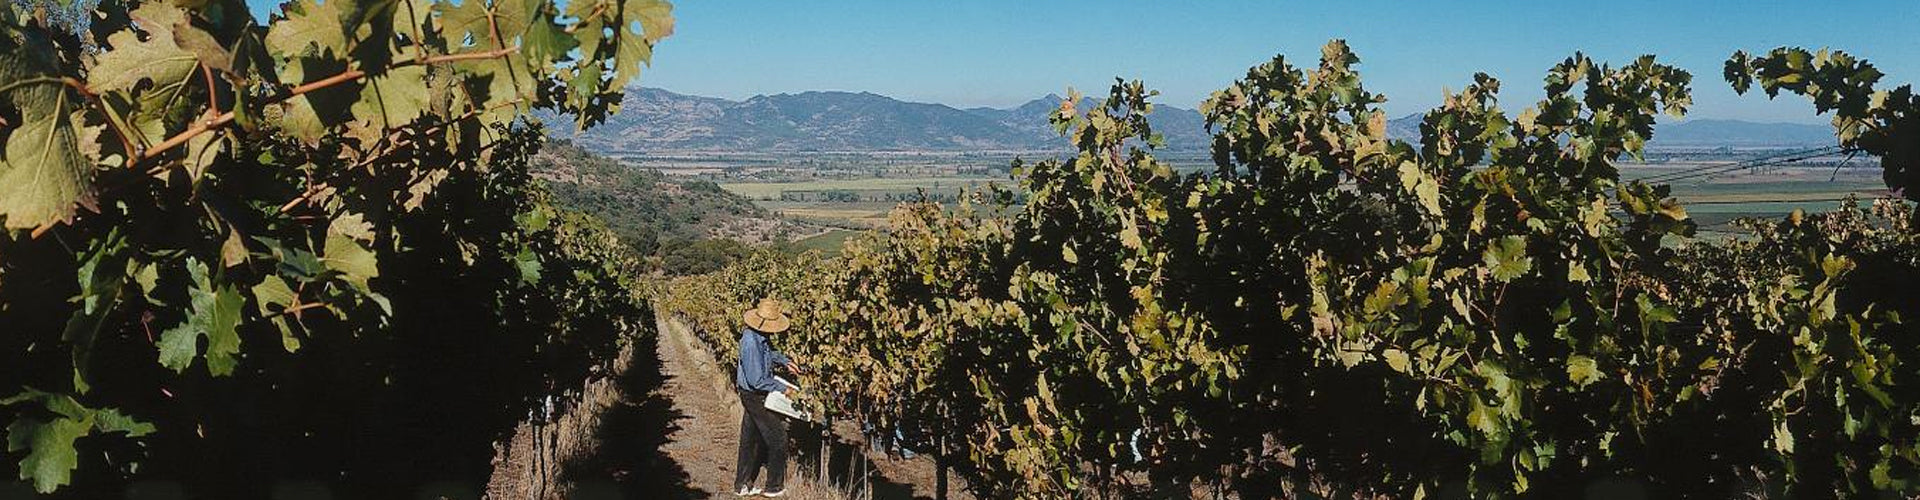 Vineyard Worker in the MontGras Vineyards